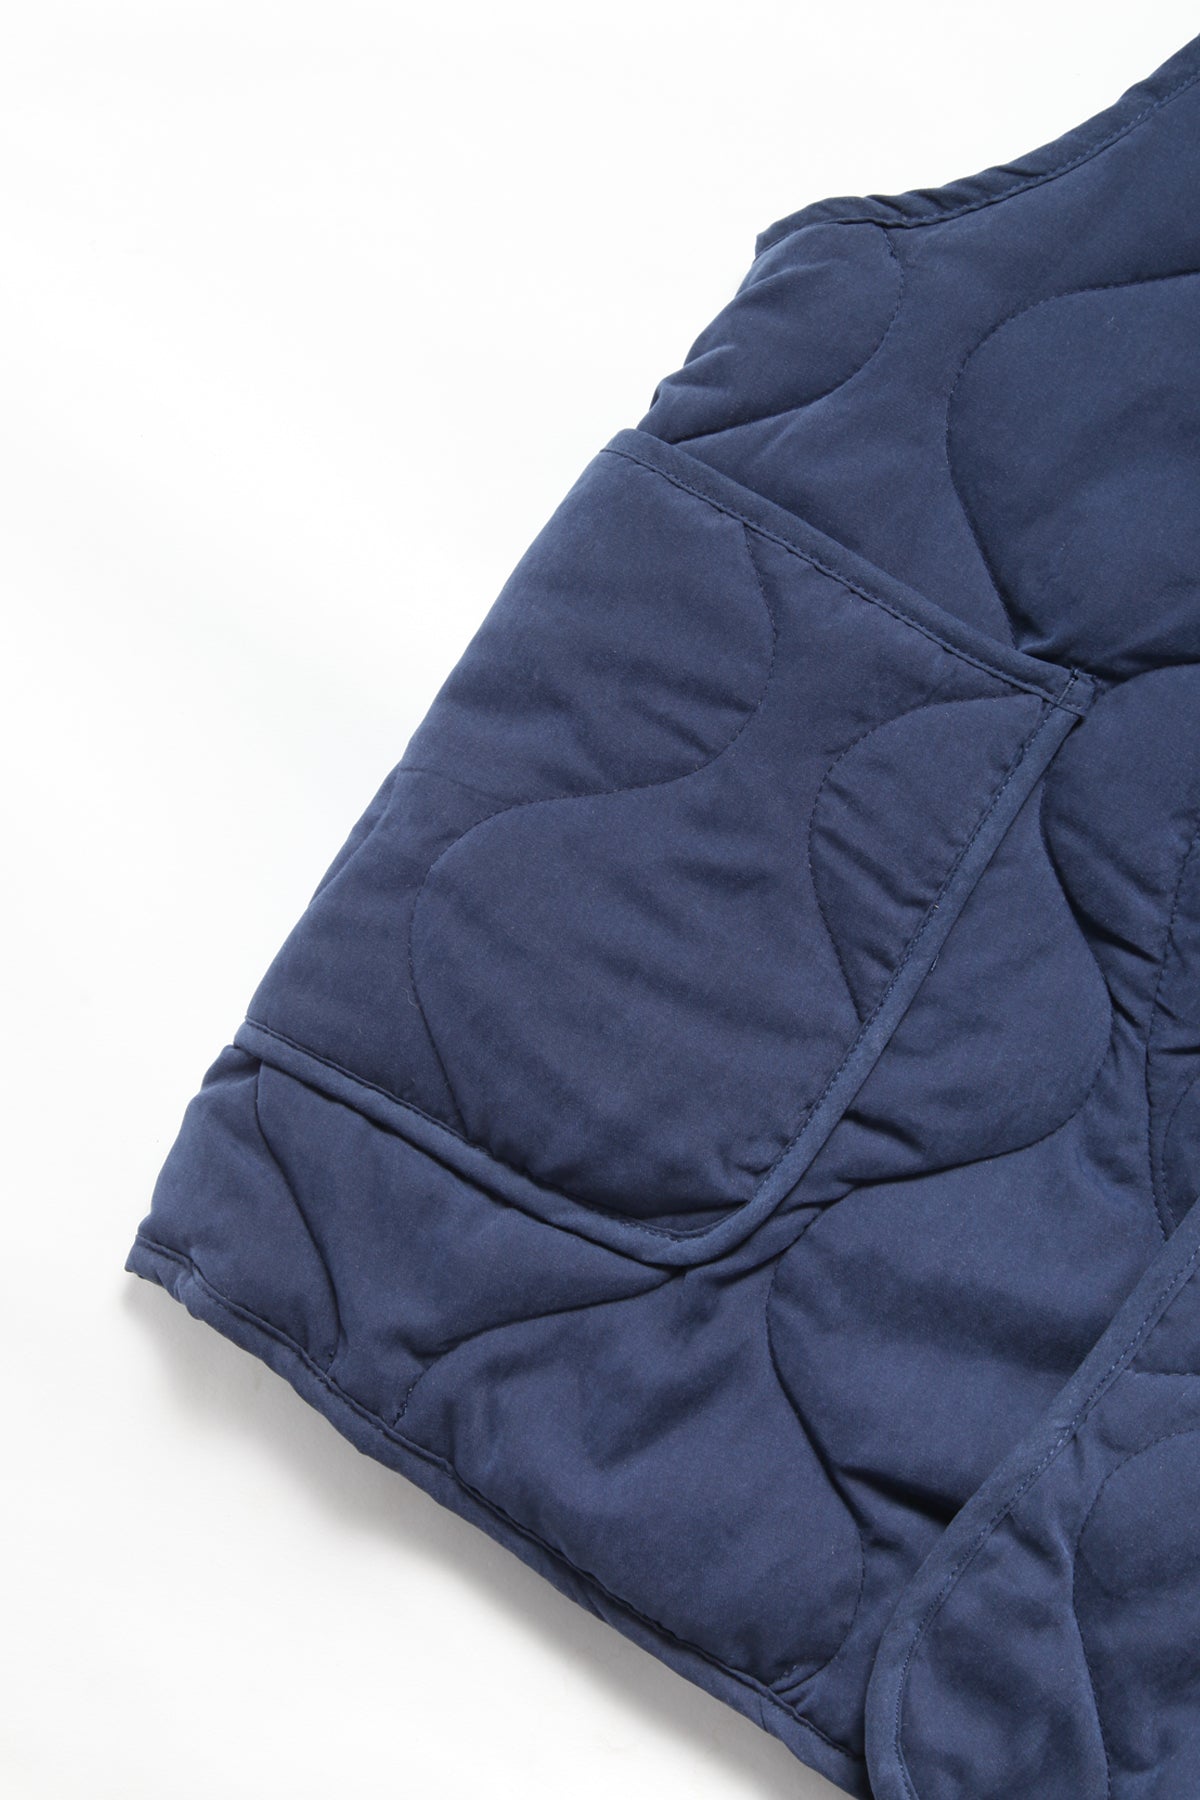 Okonkwo MFG - Quilted Liner Jacket - Blue